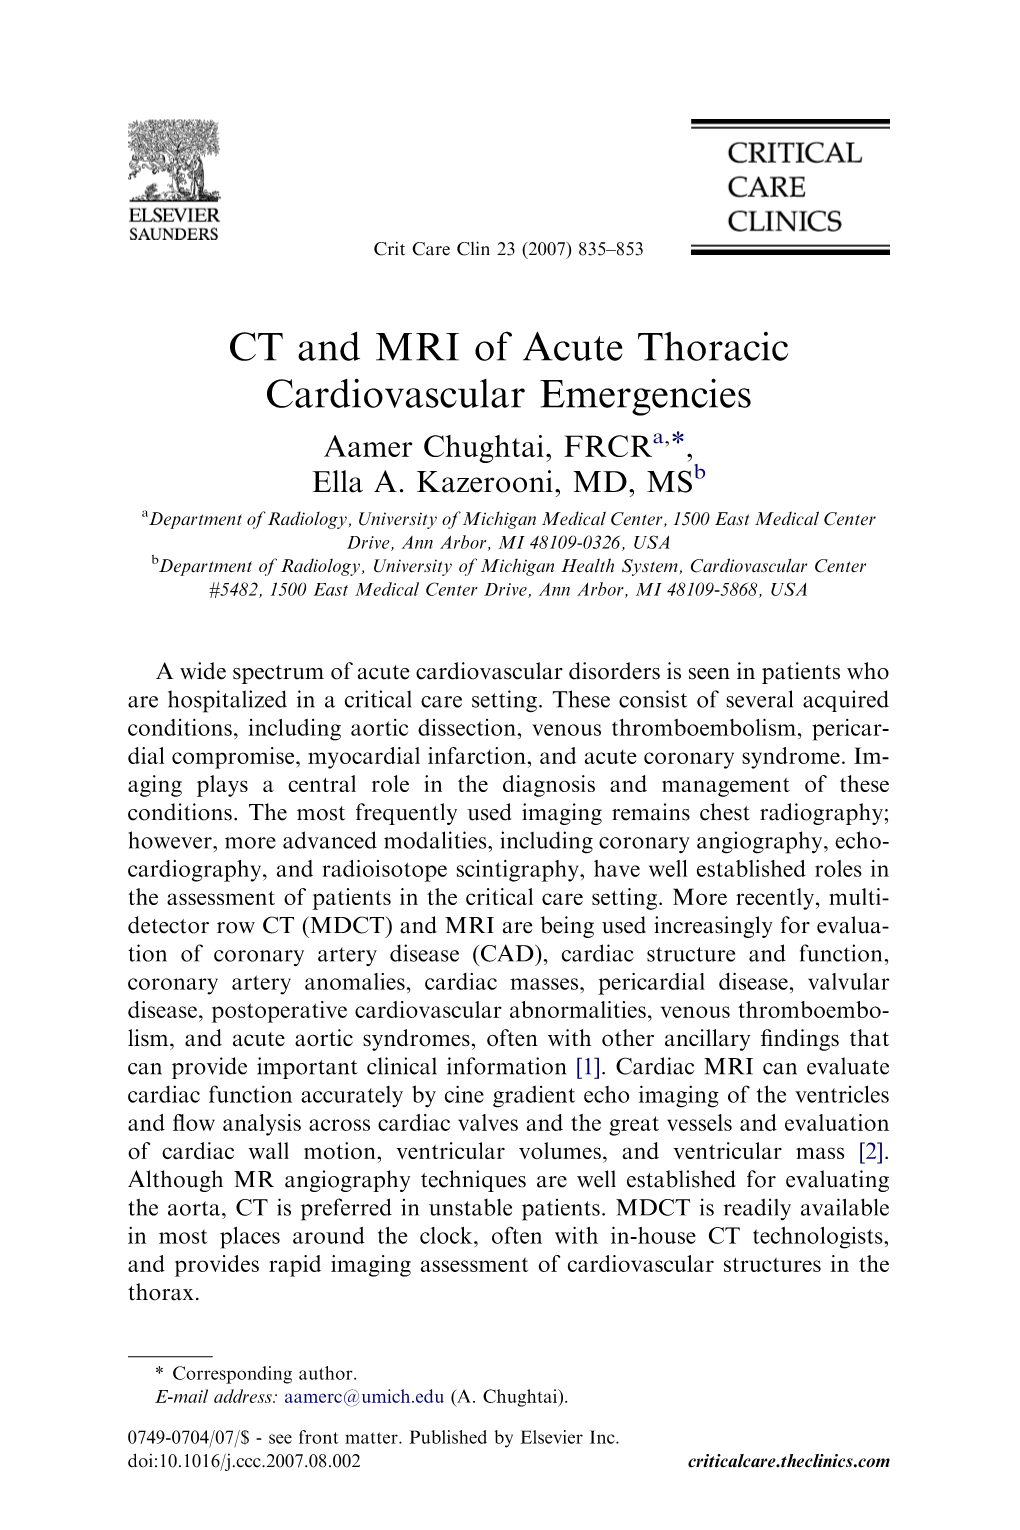 CT and MRI of Acute Thoracic Cardiovascular Emergencies Aamer Chughtai, Frcra,*, Ella A